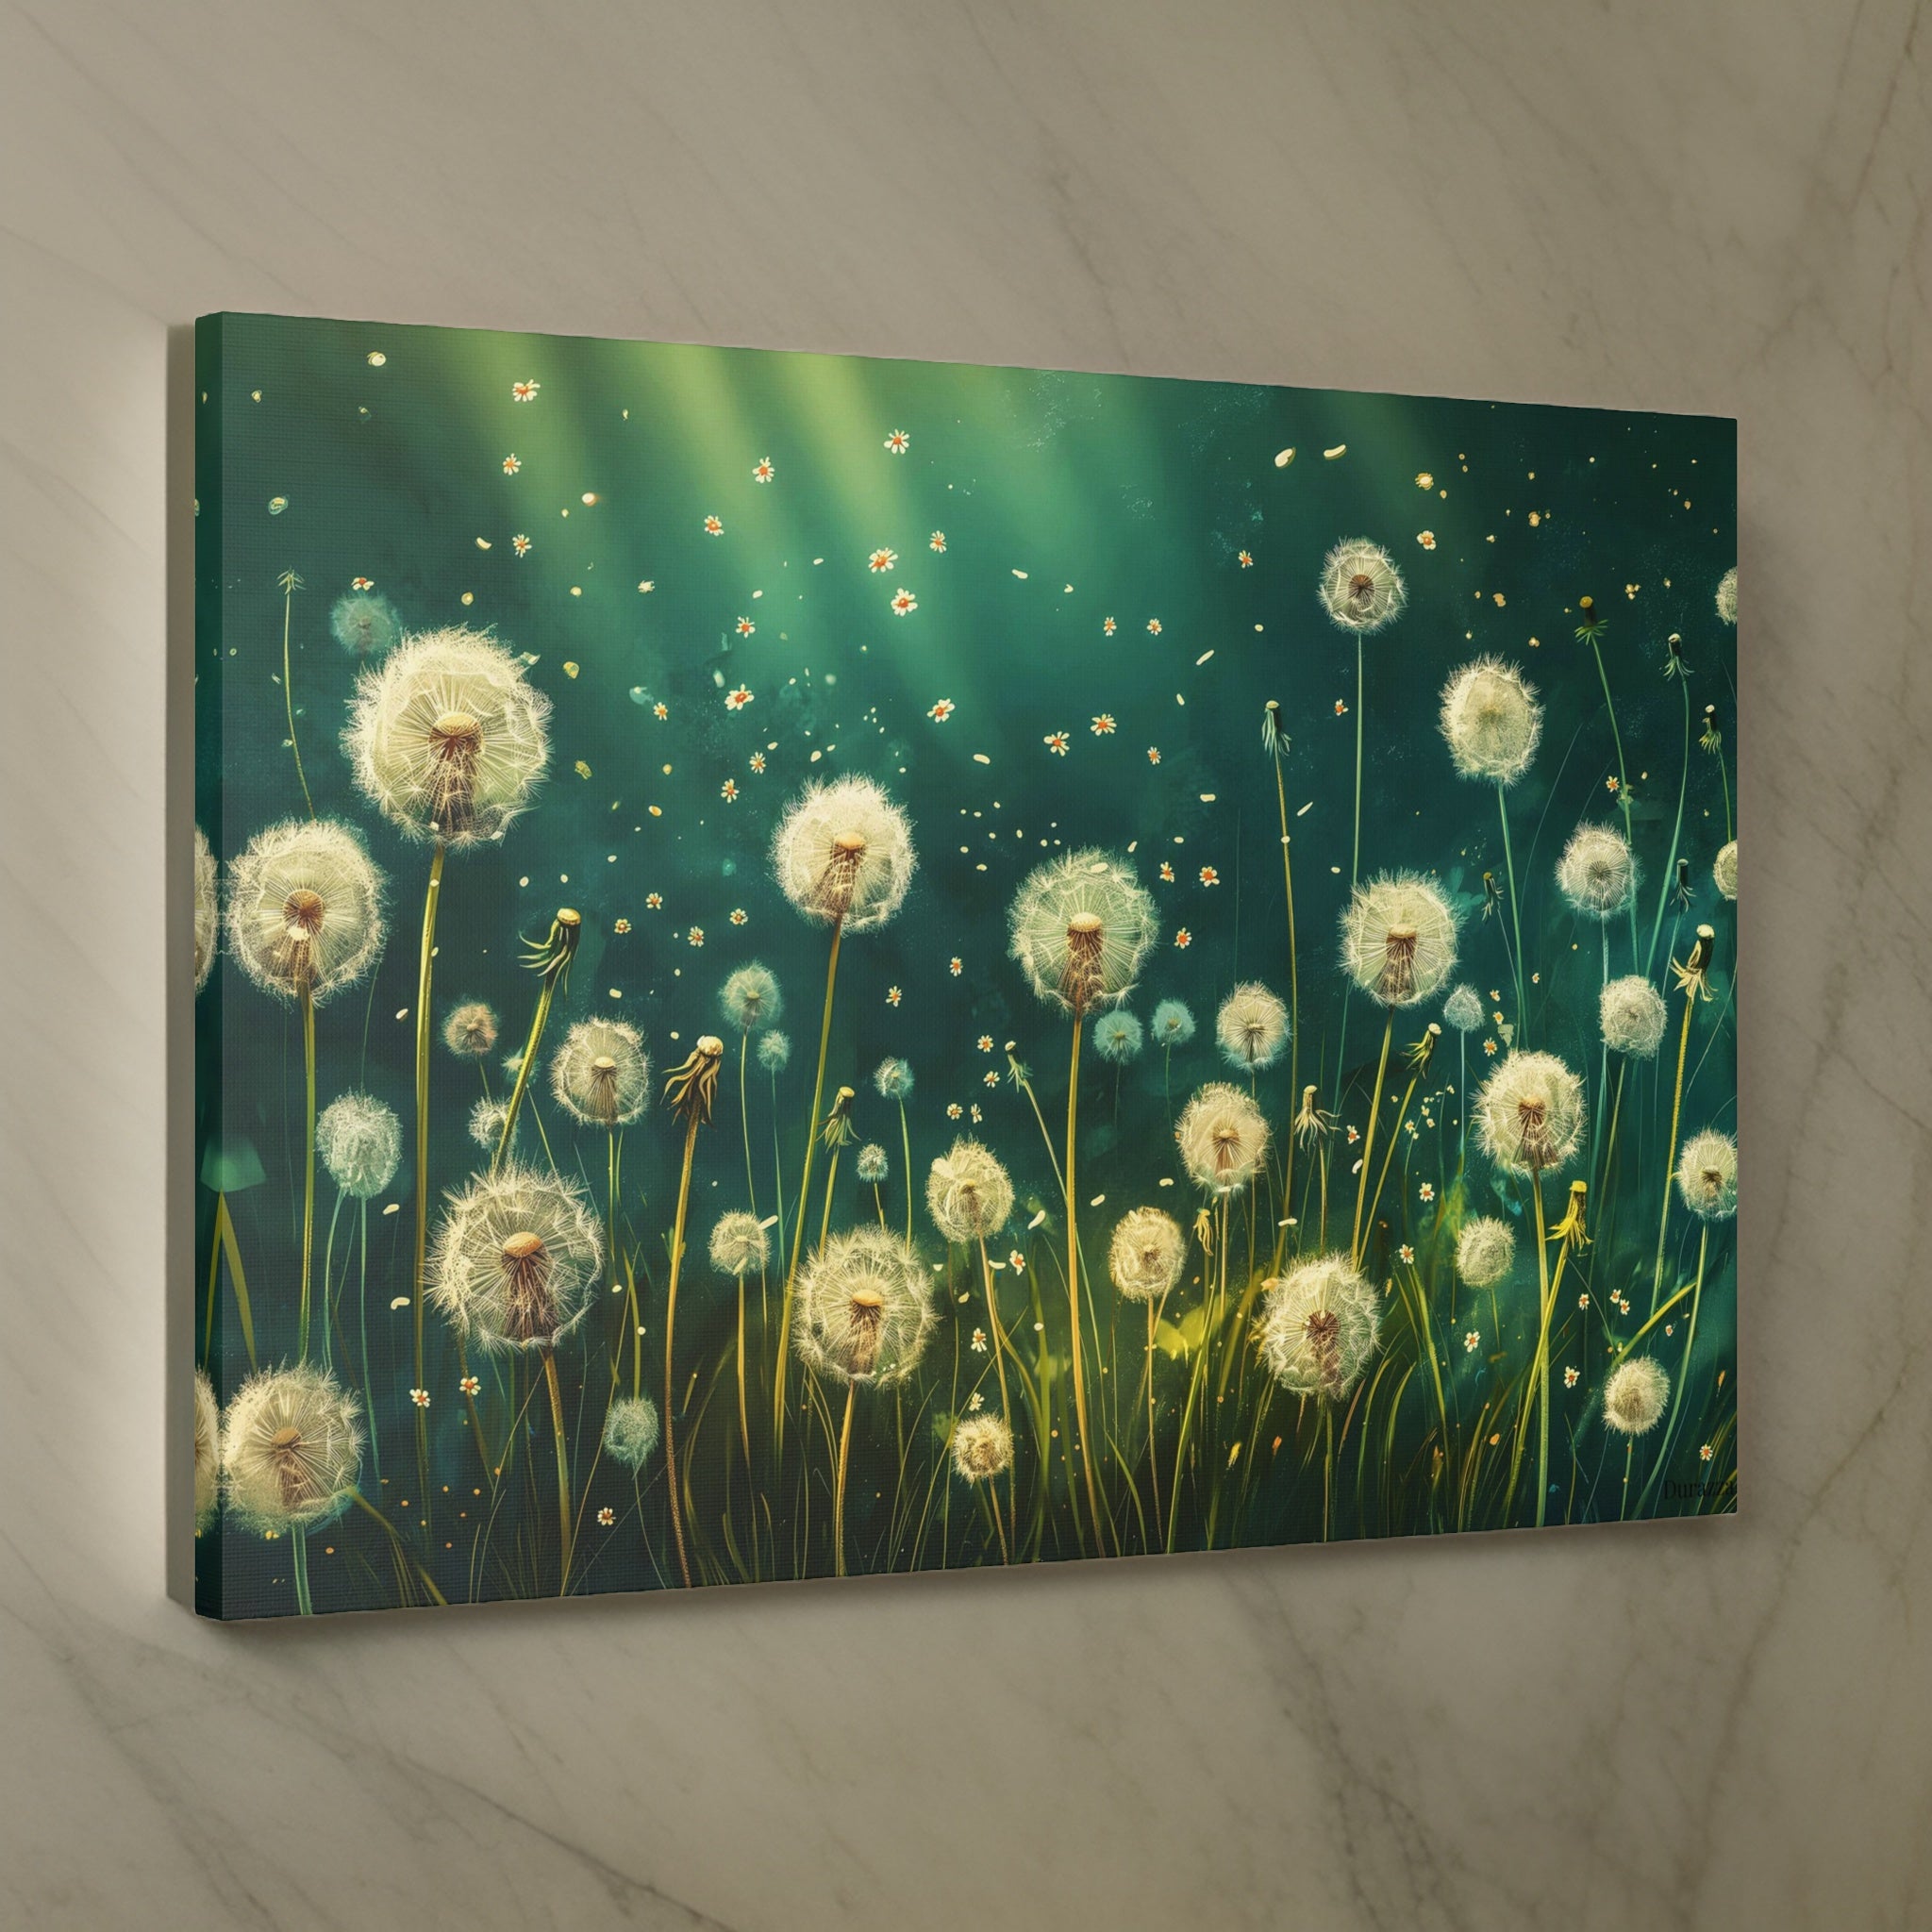 Magical Dandelion Artwork: White Flowers on a Serene Teal Backdrop